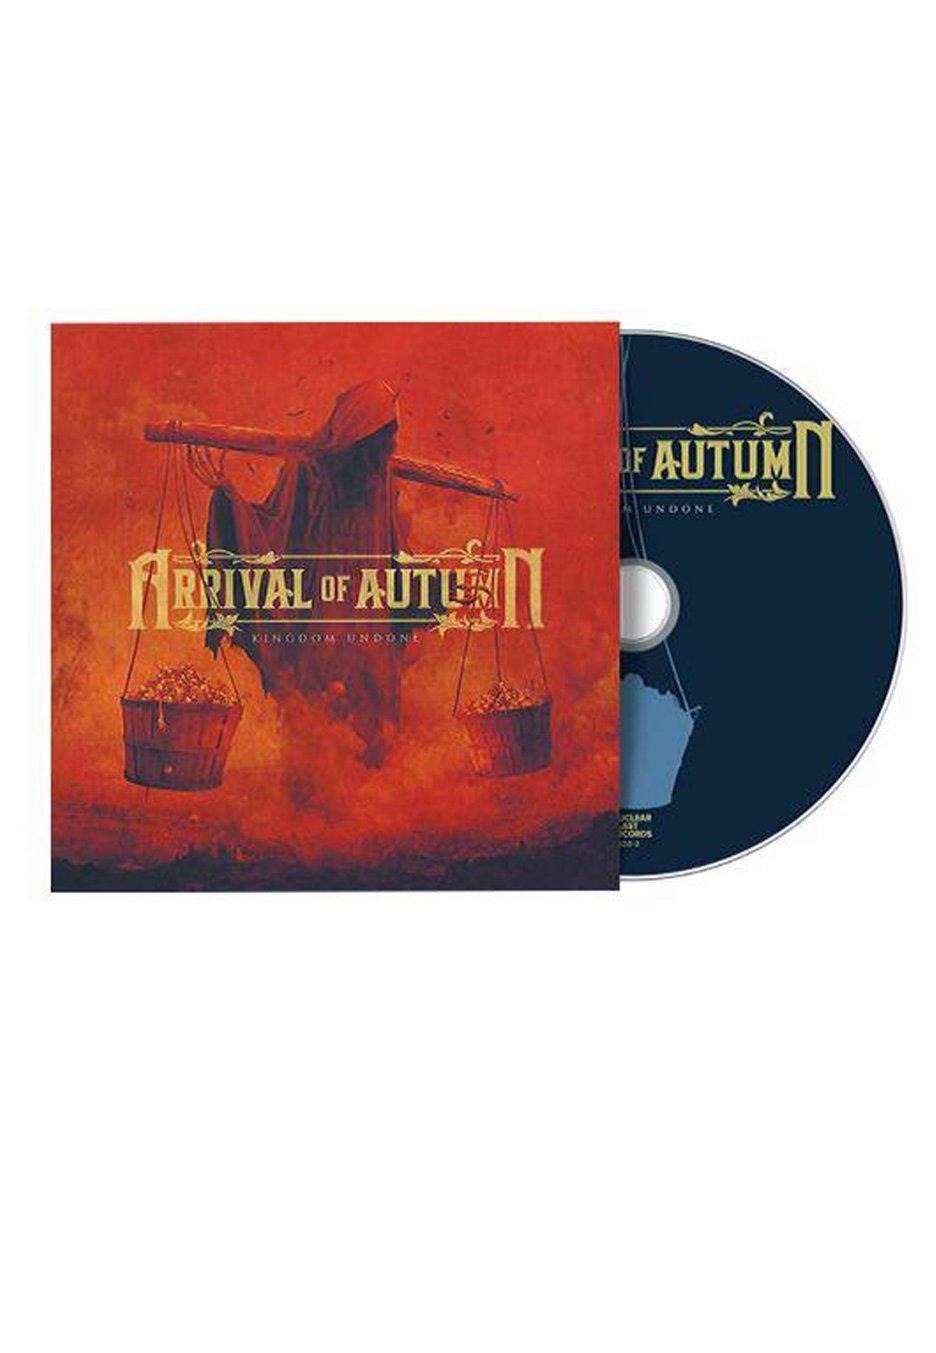 Arrival Of Autumn - Kingdom Undone - CD